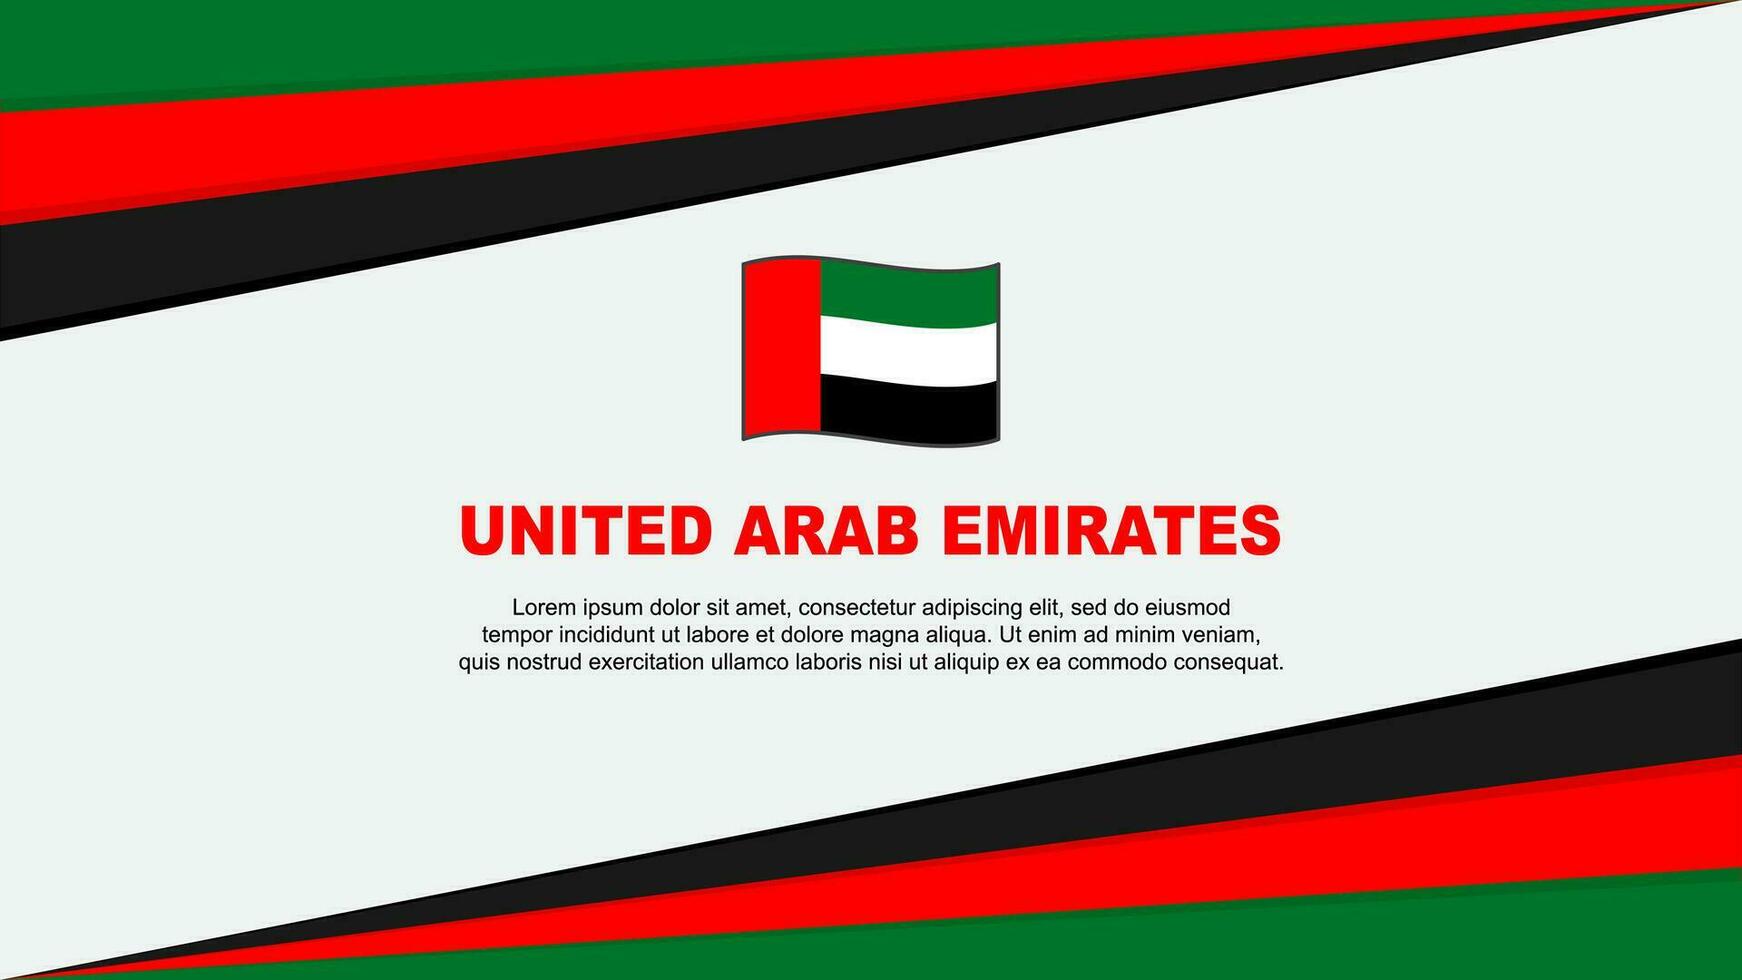 United Arab Emirates Flag Abstract Background Design Template. United Arab Emirates Independence Day Banner Cartoon Vector Illustration. Design